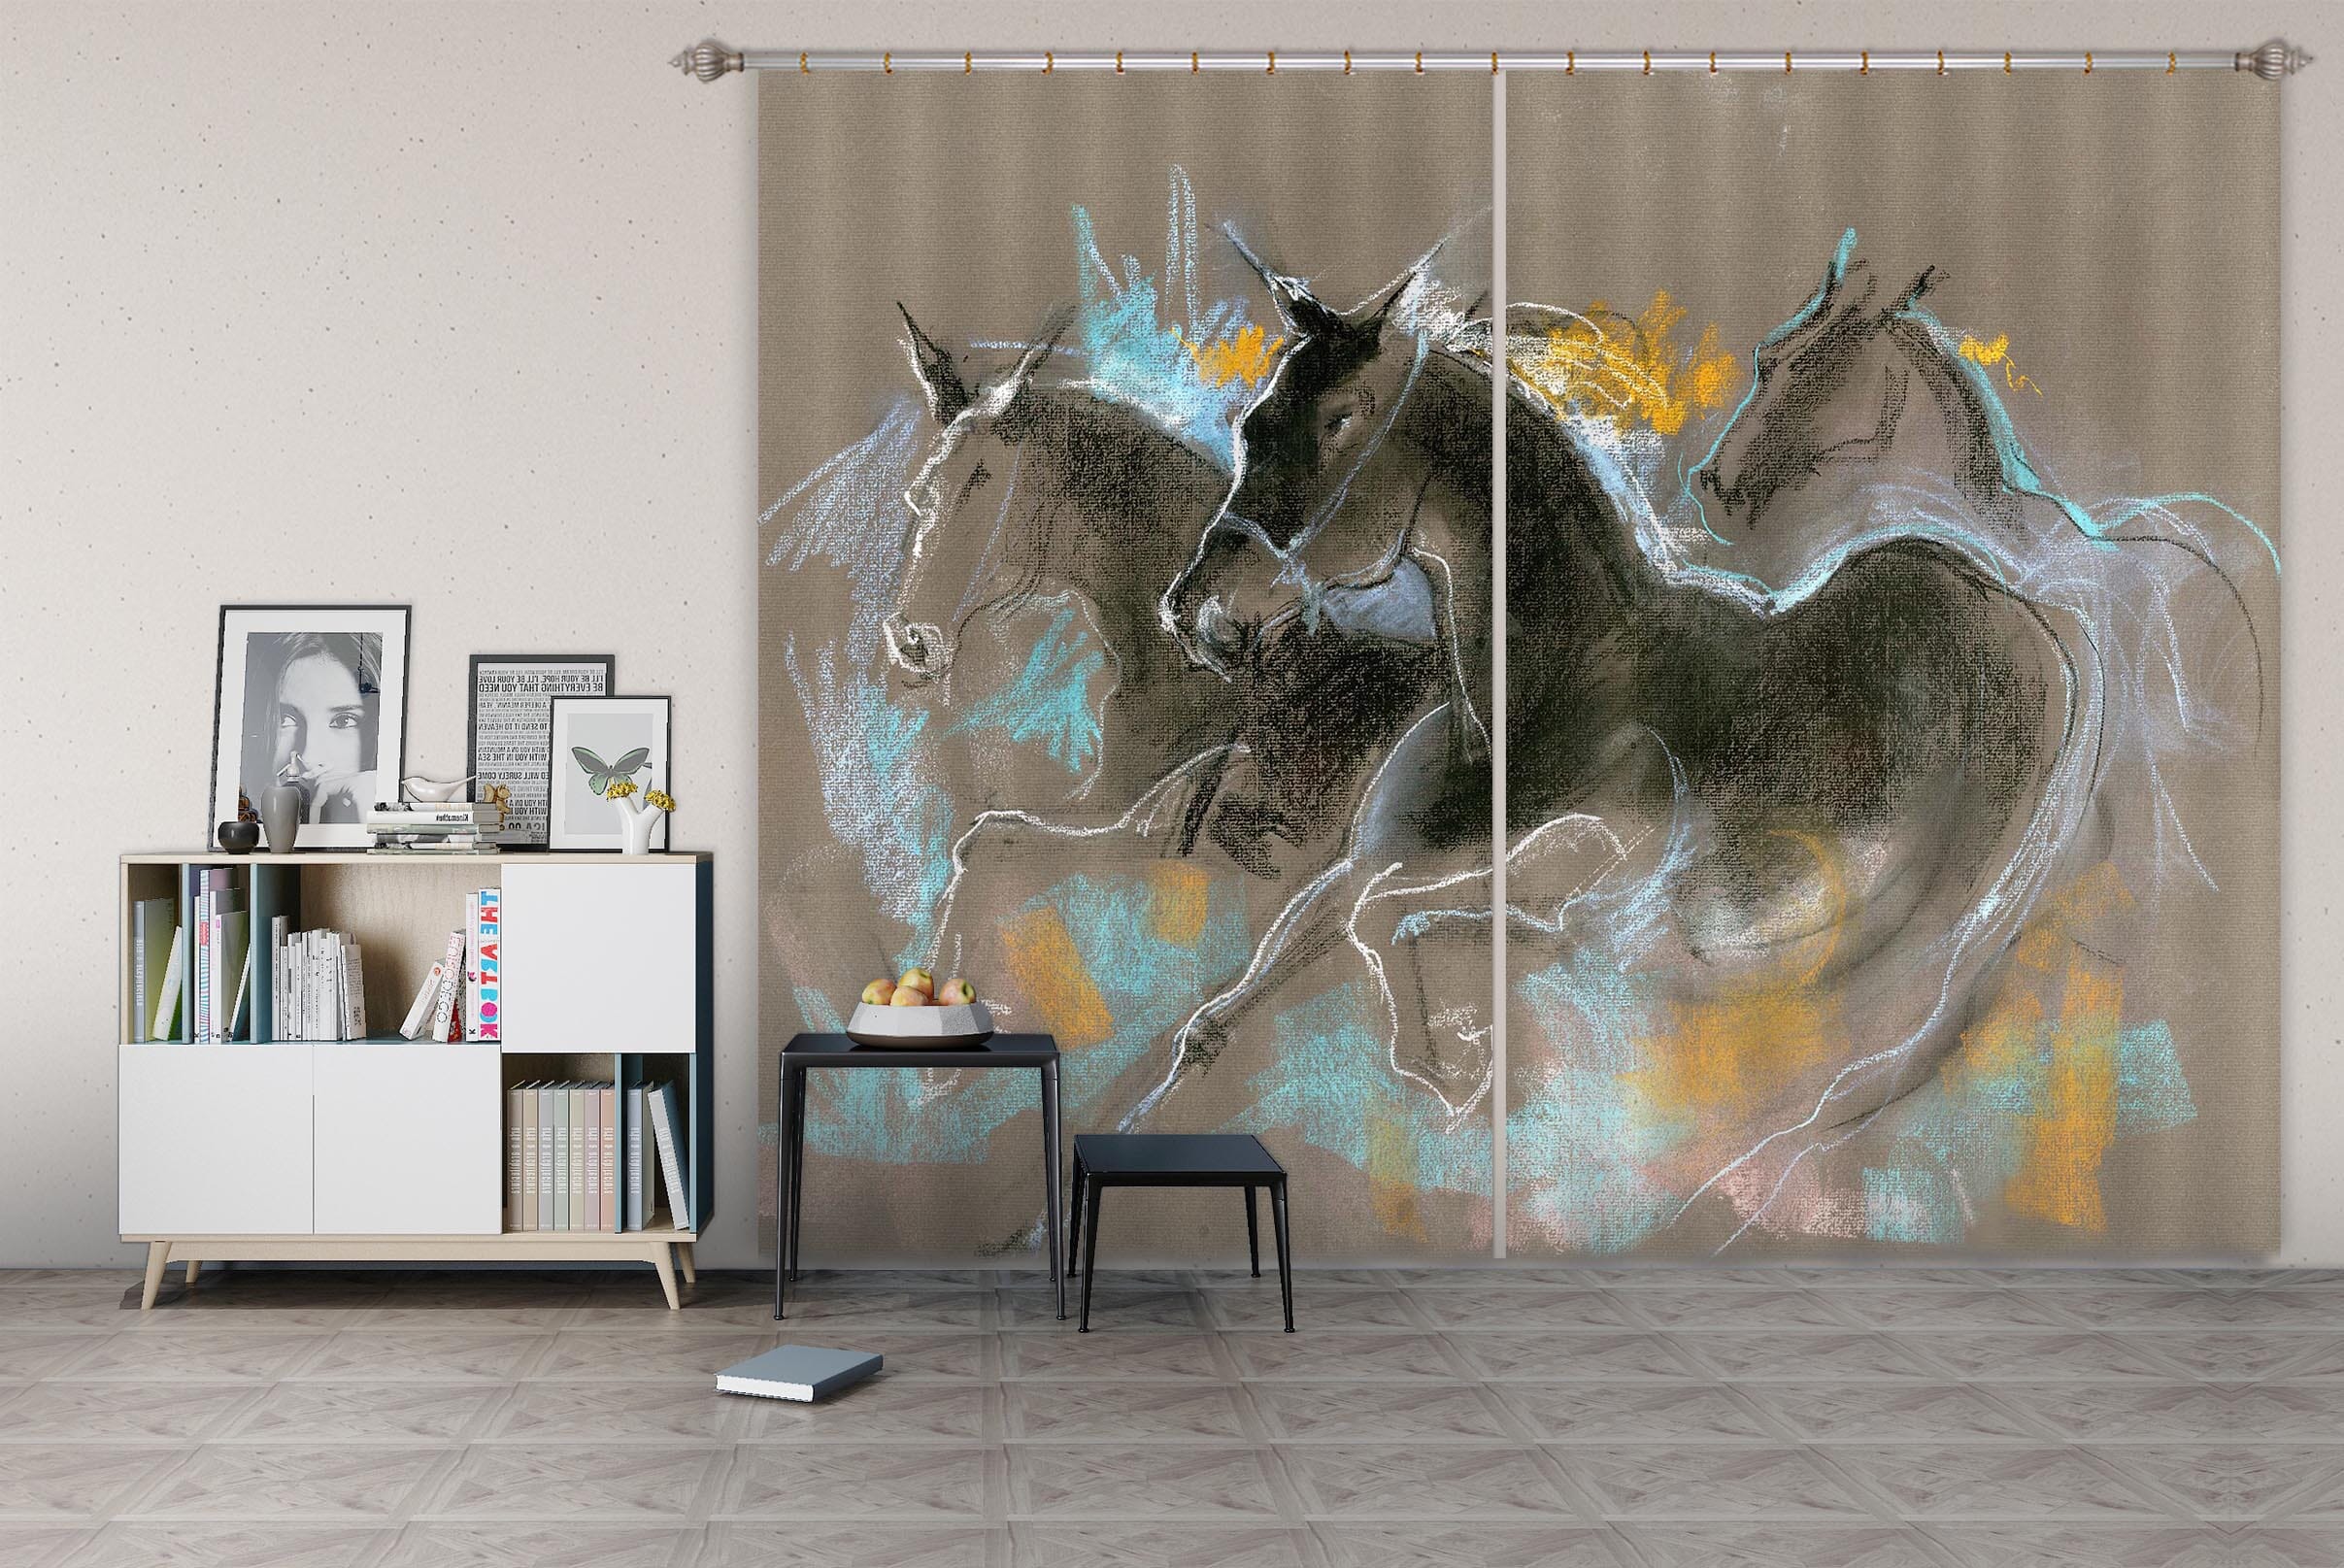 3D Running Horse 013 Anne Farrall Doyle Curtain Curtains Drapes Curtains AJ Creativity Home 